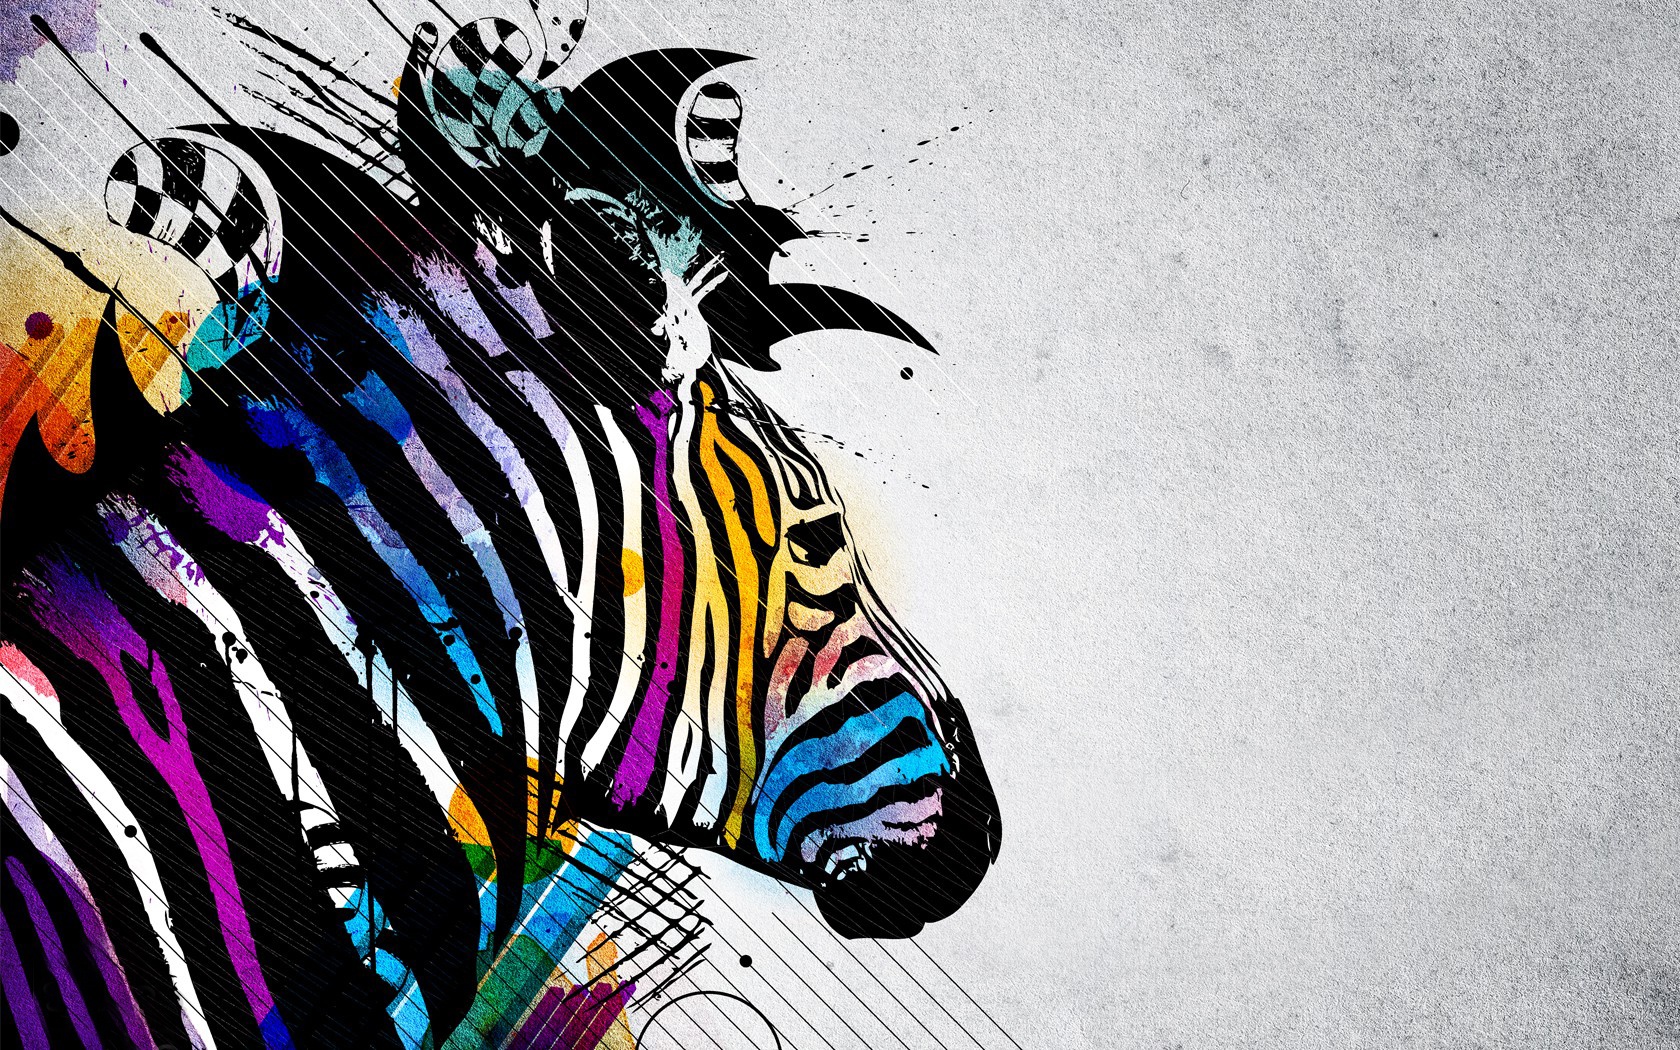 Zebra Background